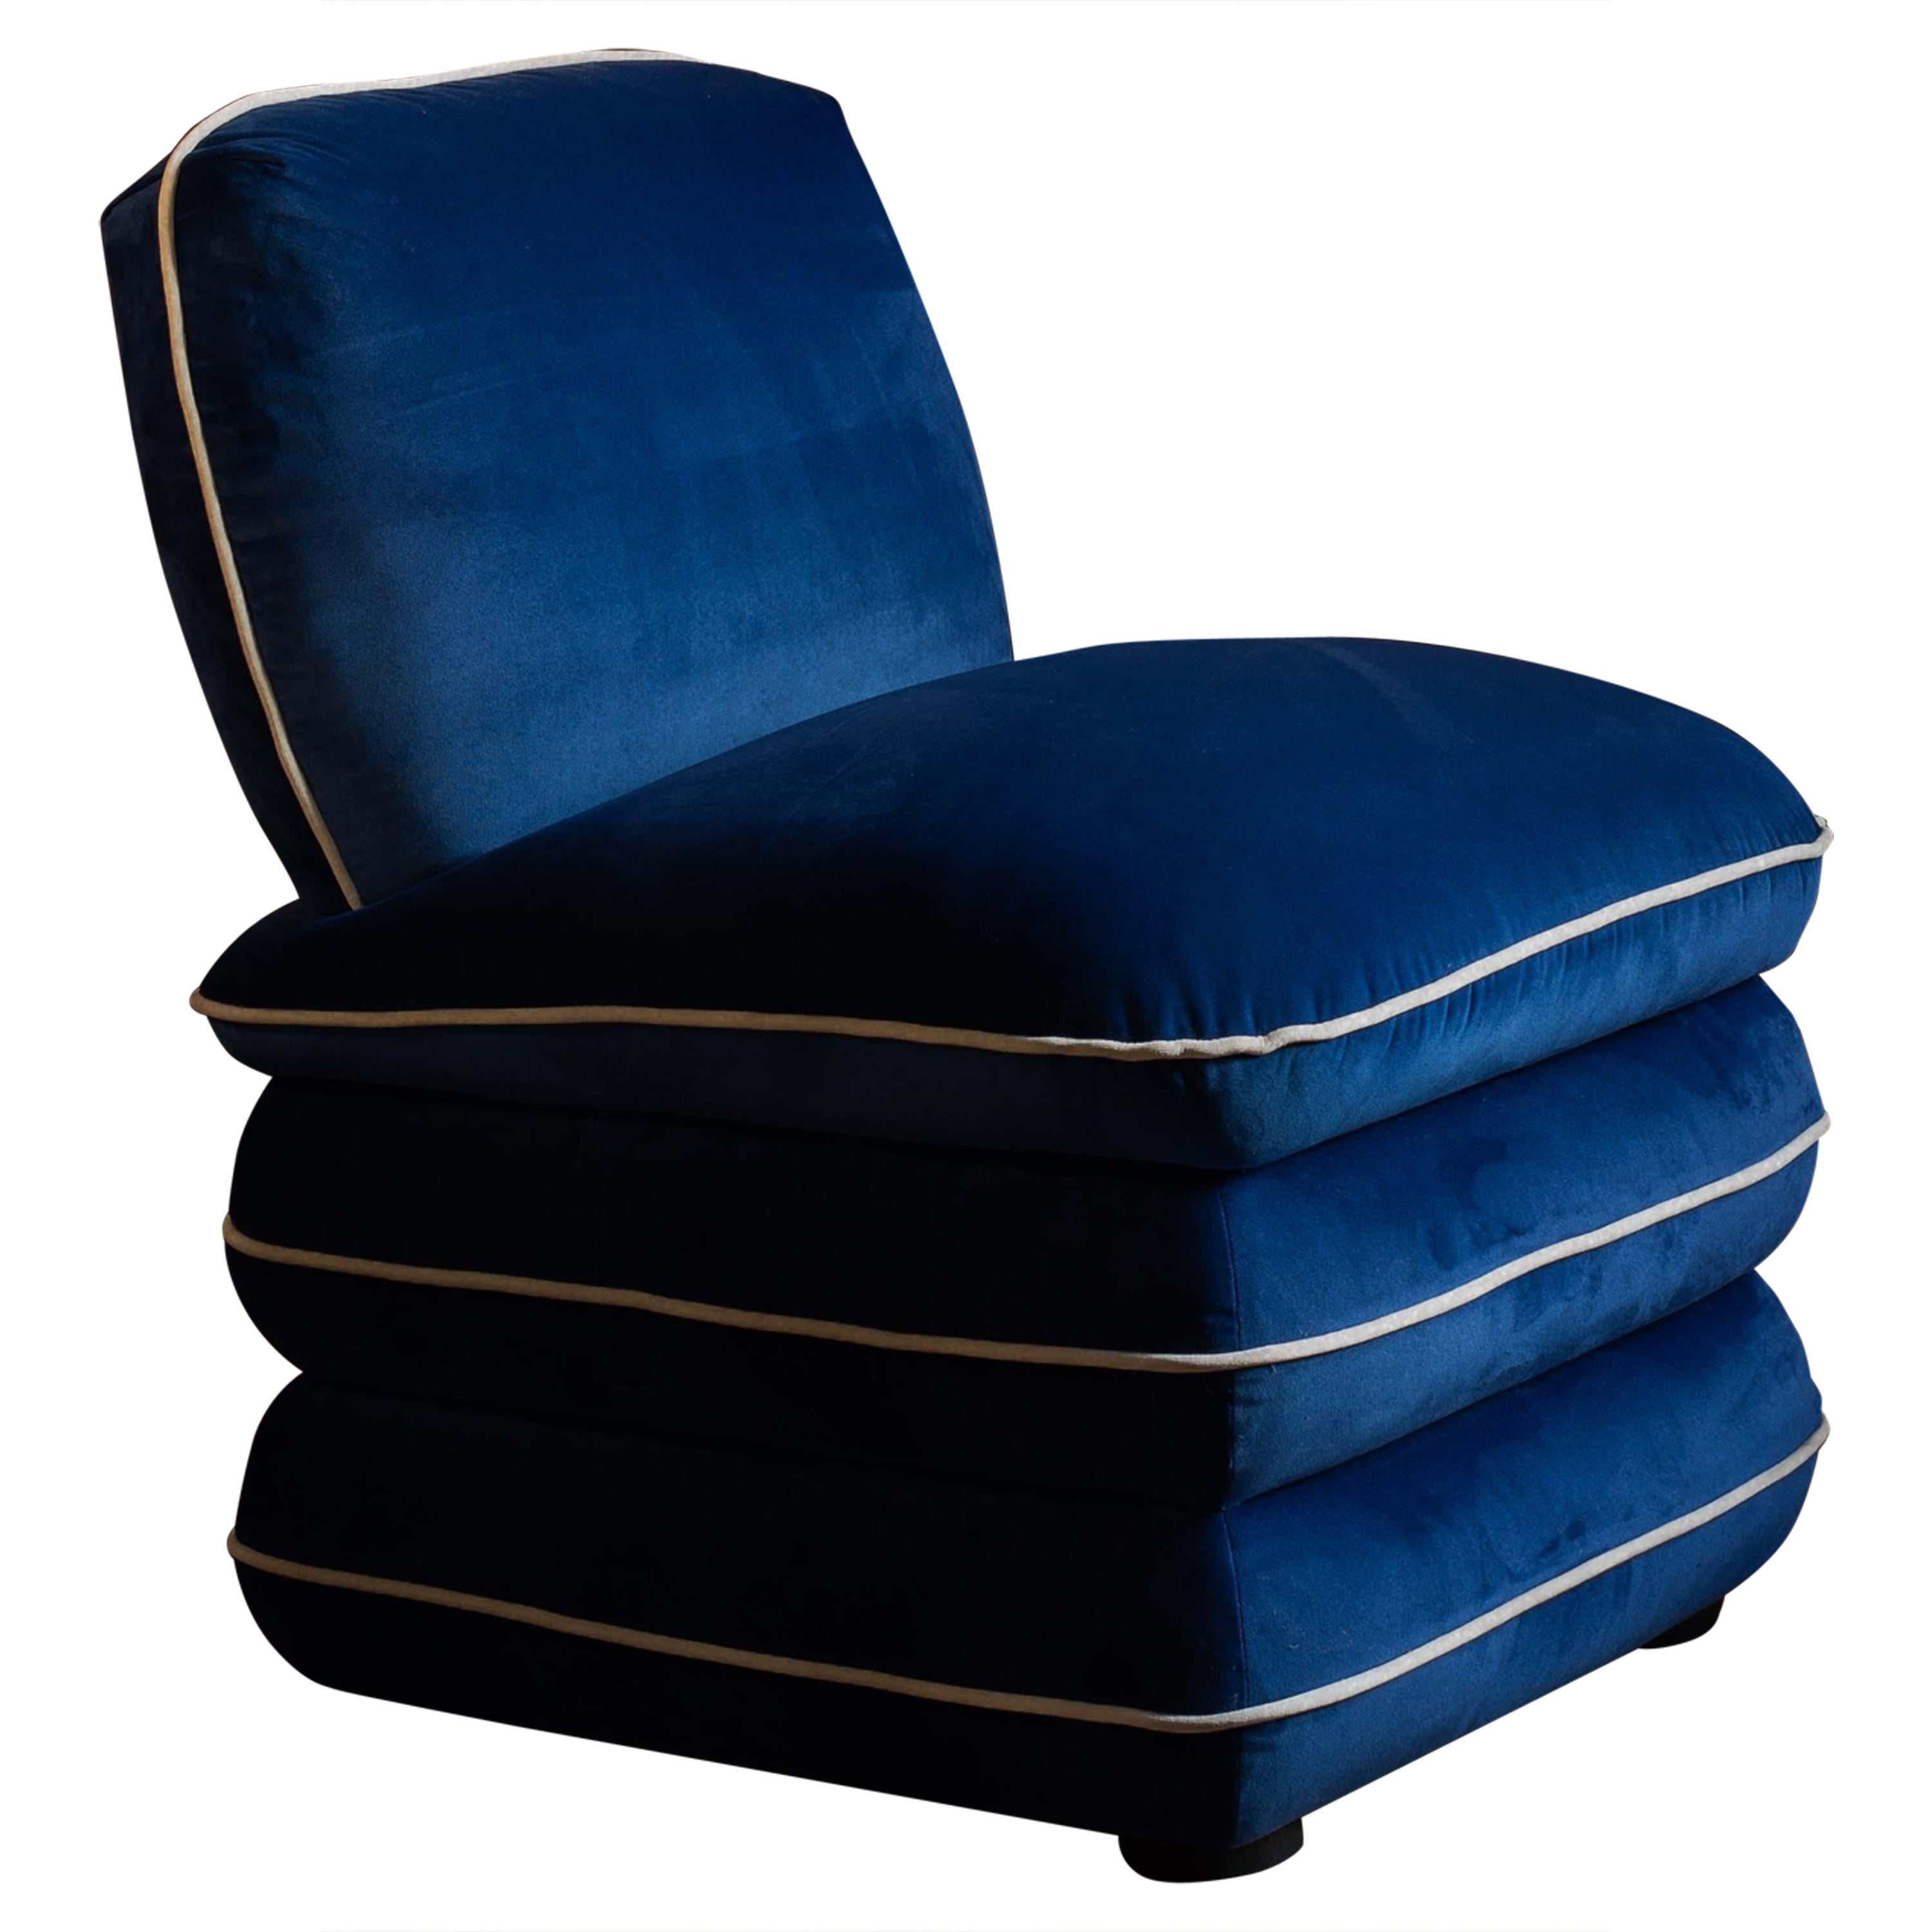 Chaise d'oreiller par Ash - velours bleu marine